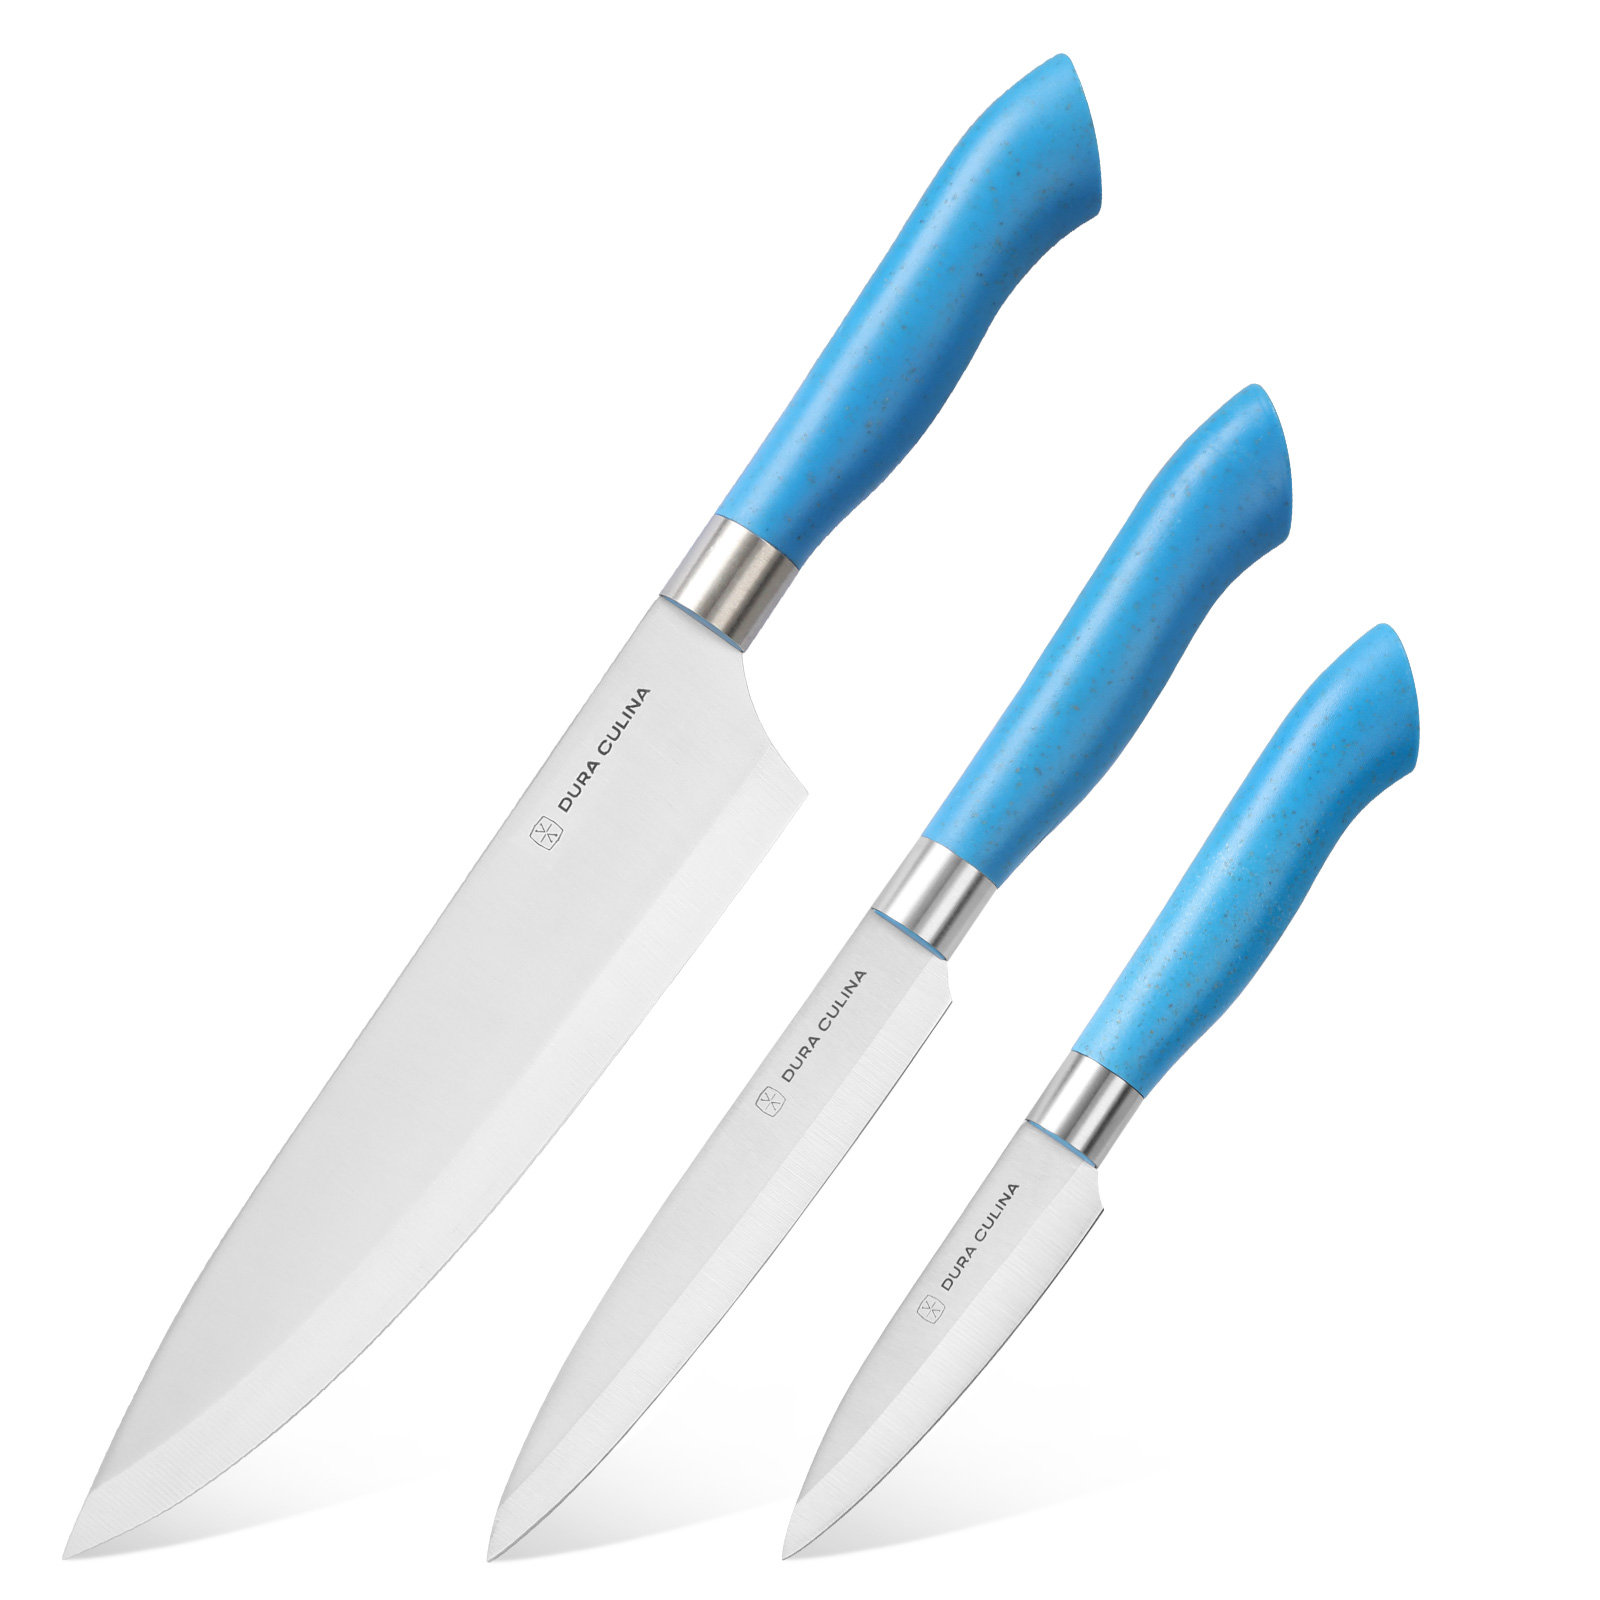 Nutriblade Knife Set by Granitestone, High Grade Professional Chef